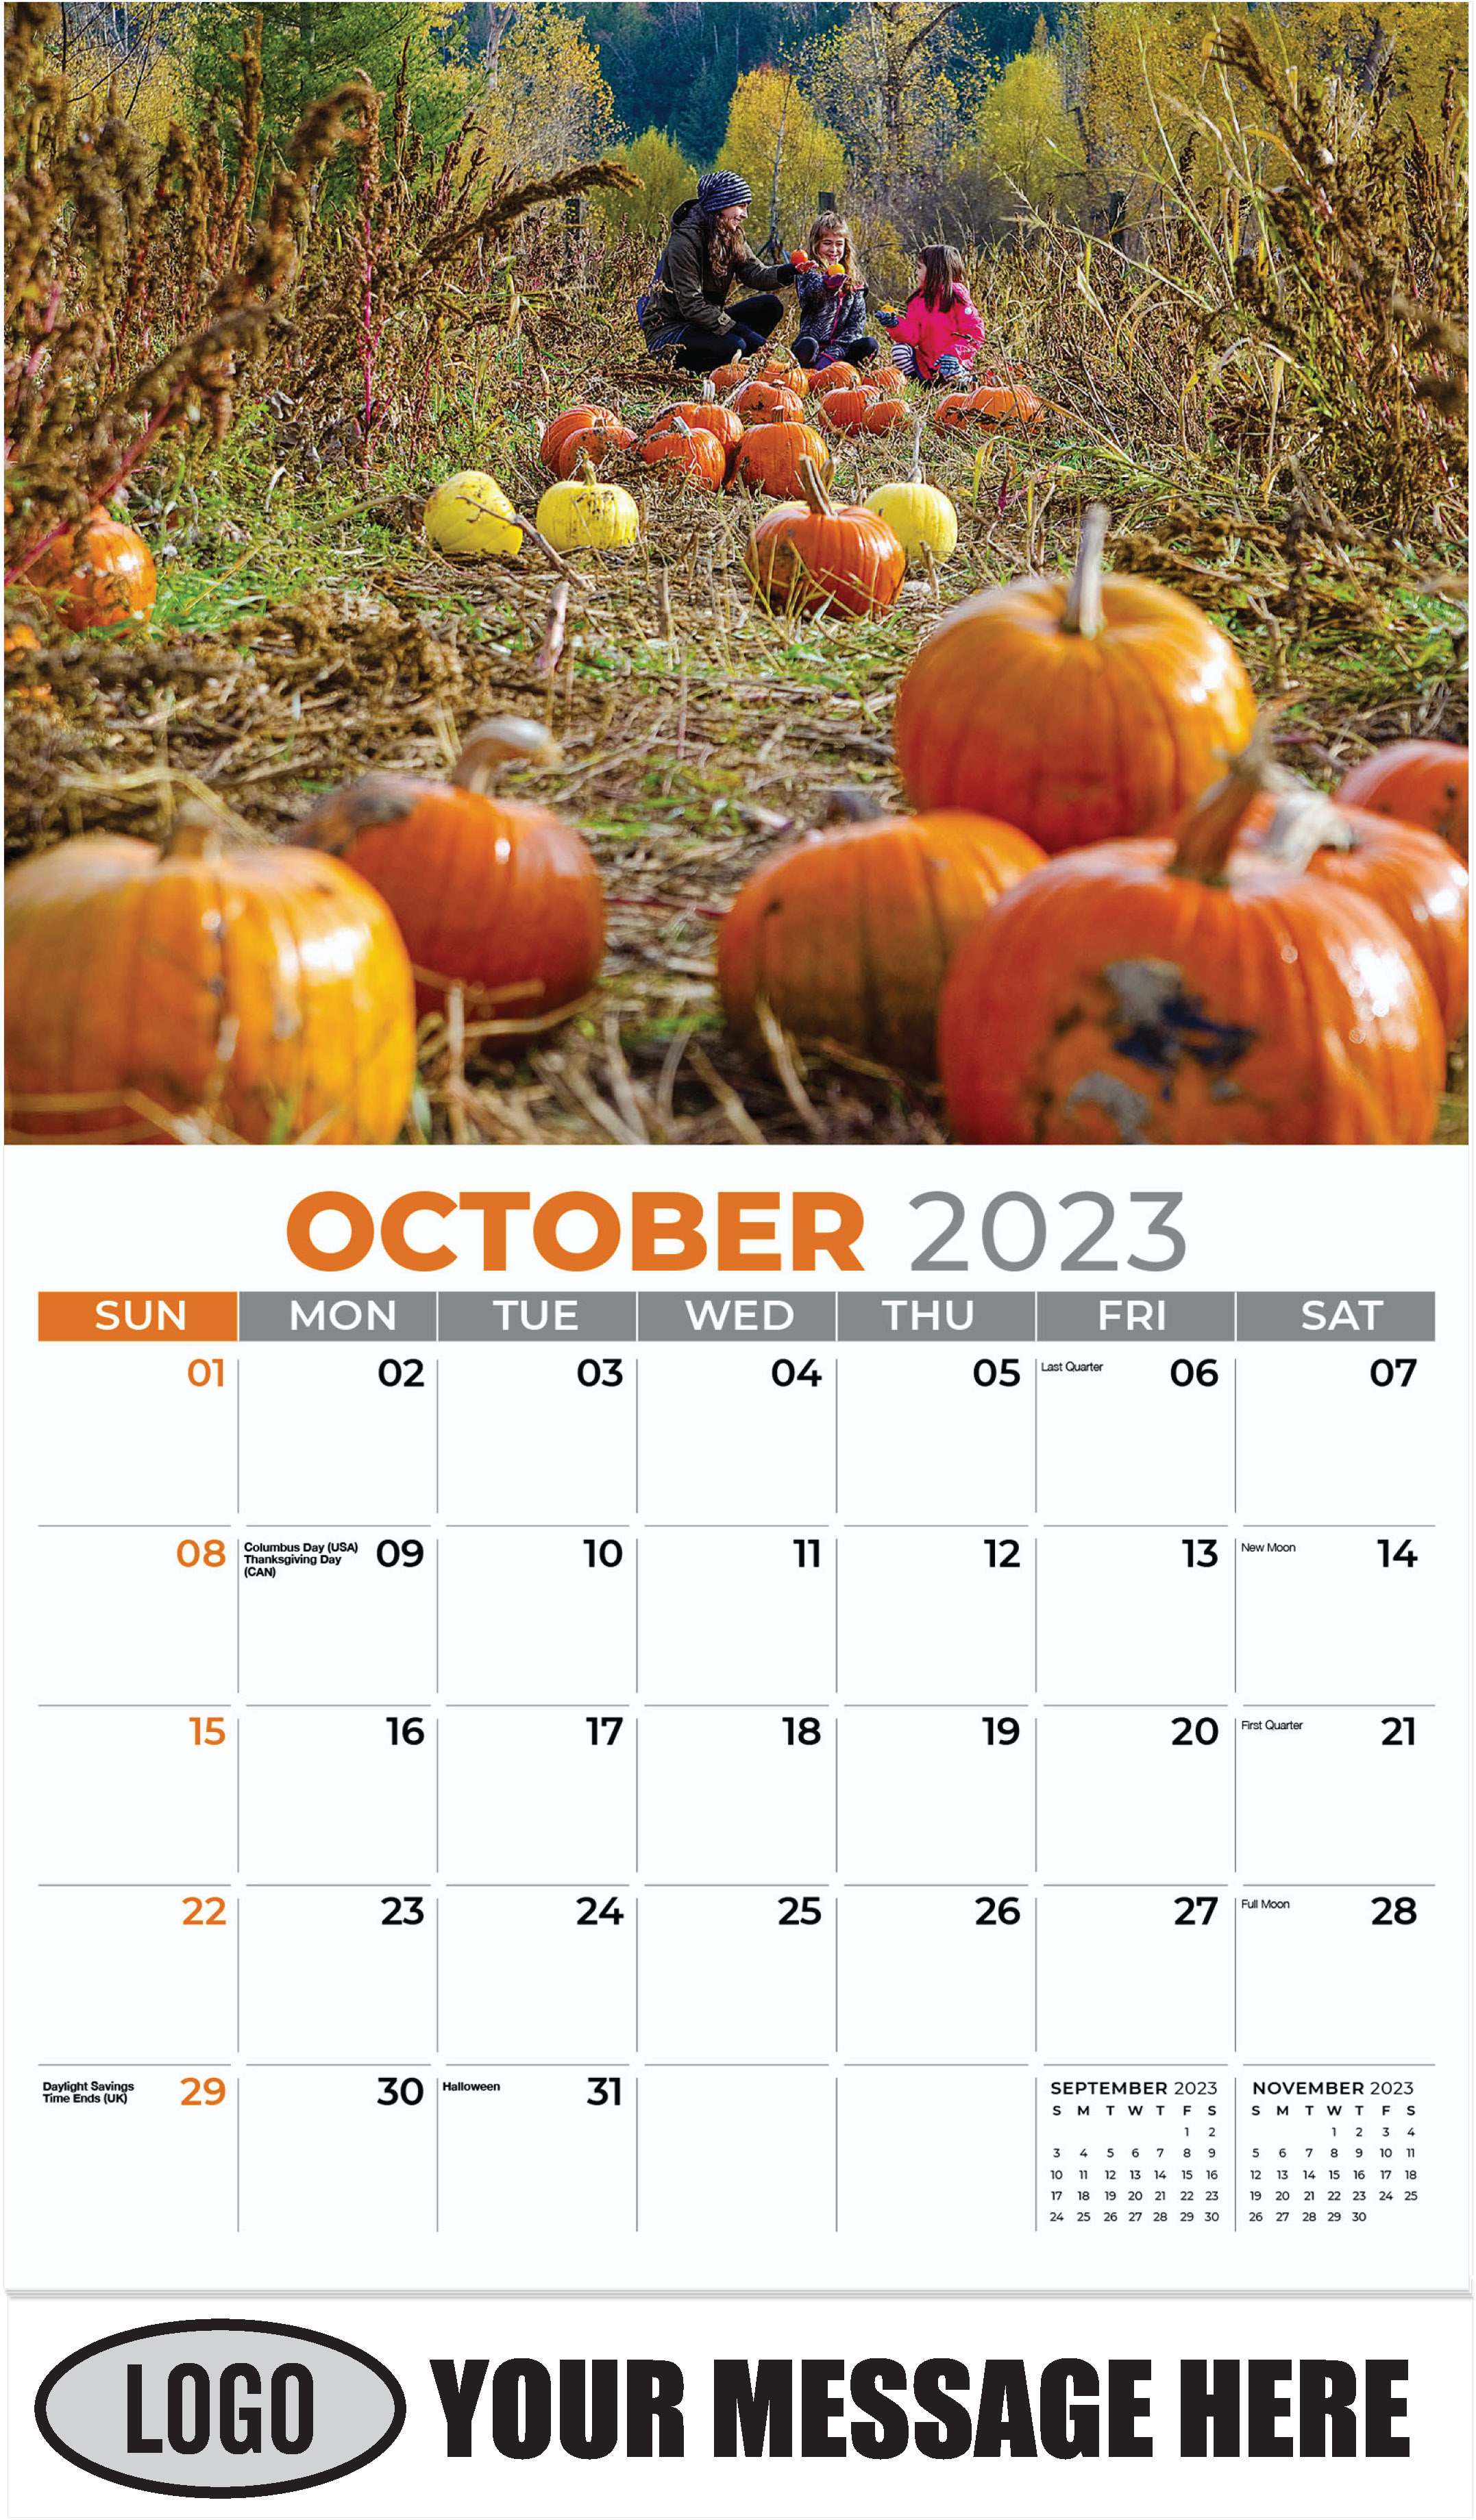 Pumpkin Picking - October - Country Spirit 2023 Promotional Calendar